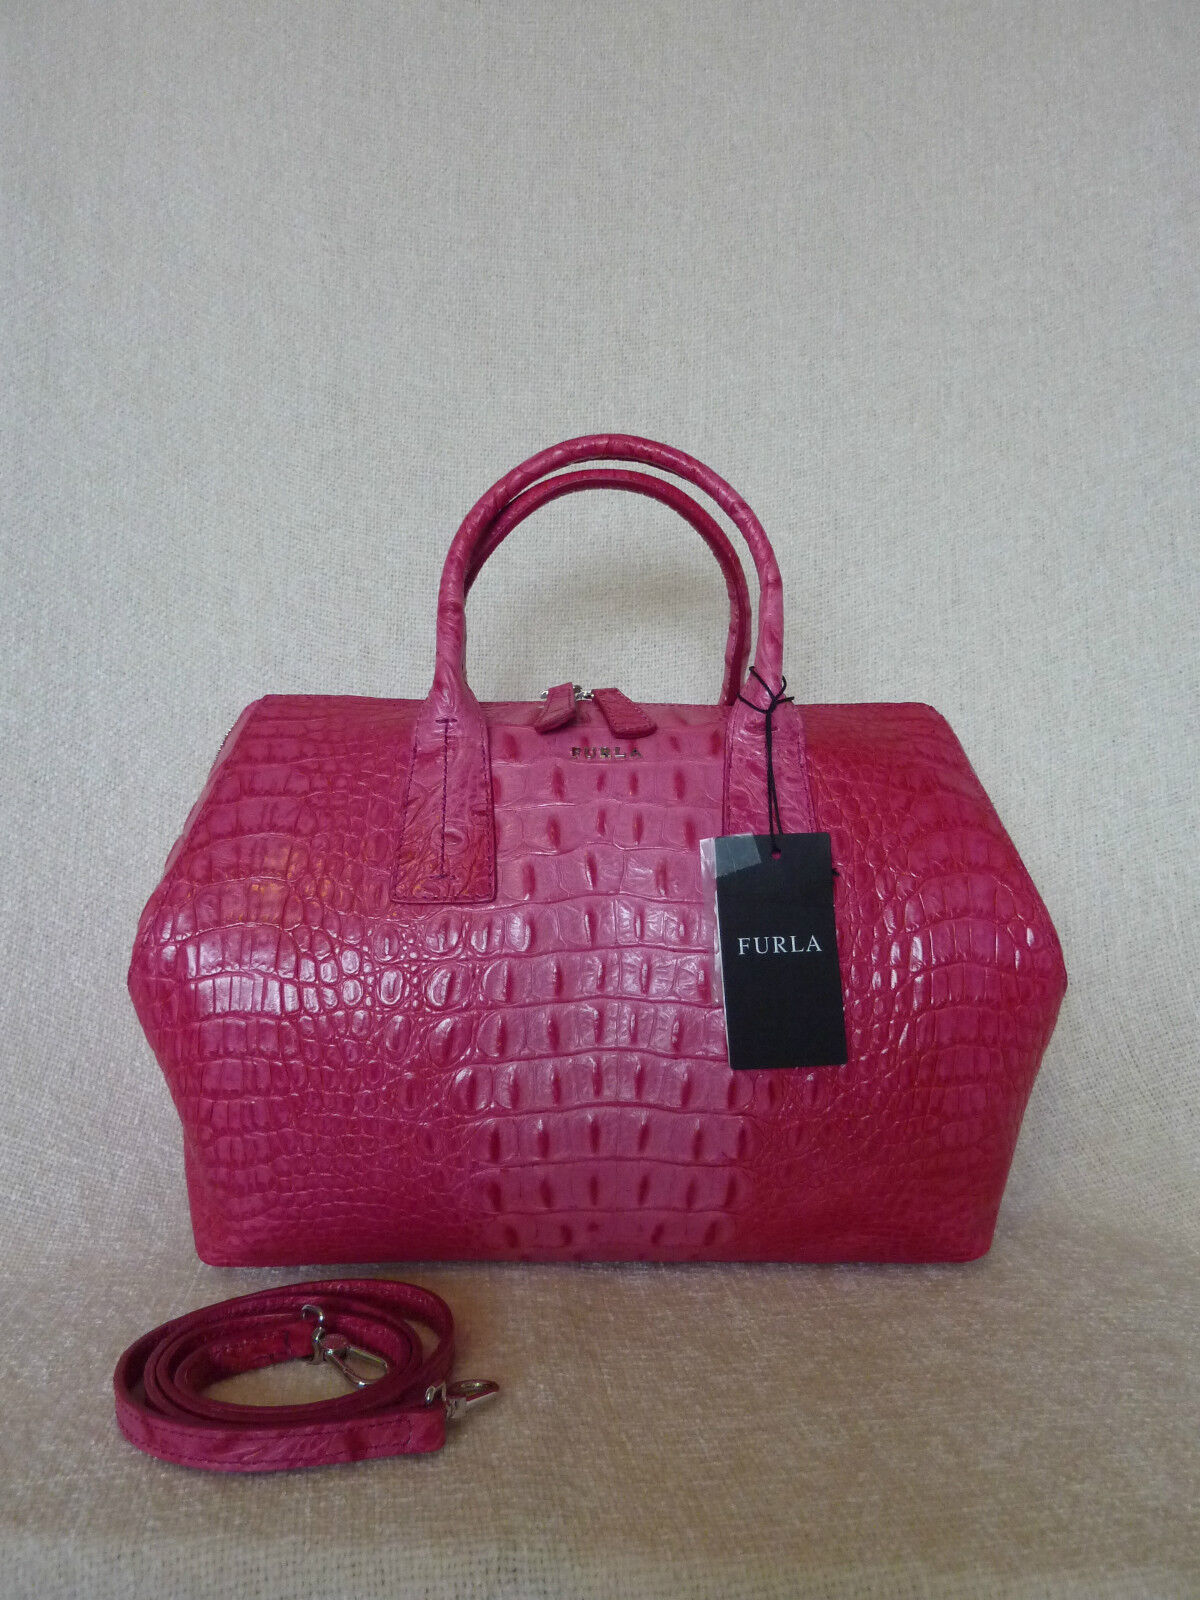 NWT FURLA Rosada Pink Red Croc Embossed Leather Papermoon Satchel Bag - $448